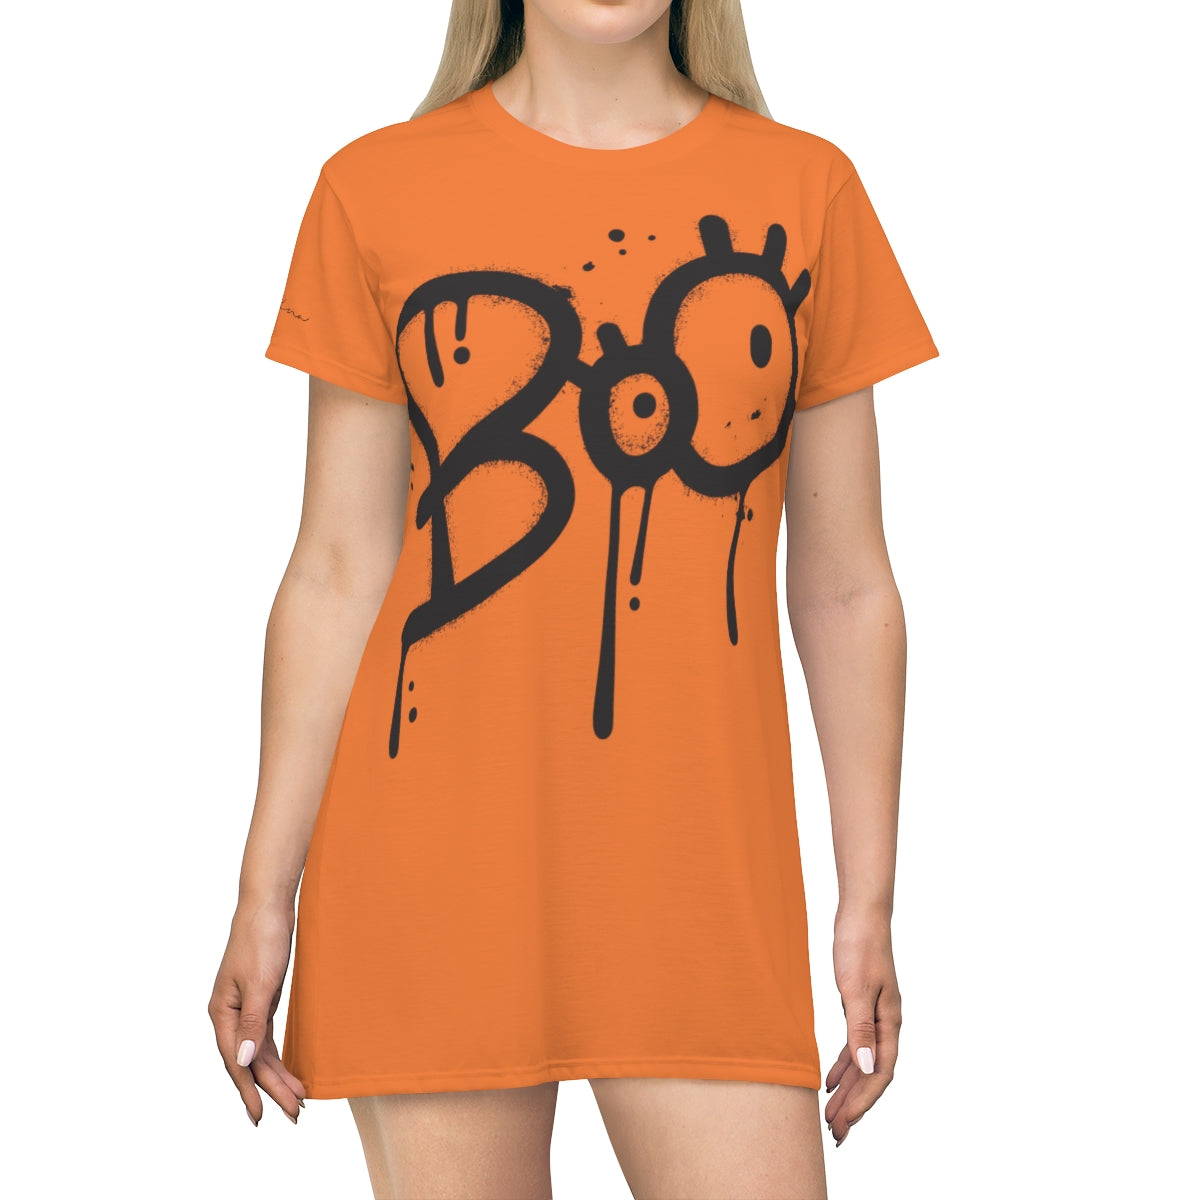 Shirtdress, Orange Boo-Bat